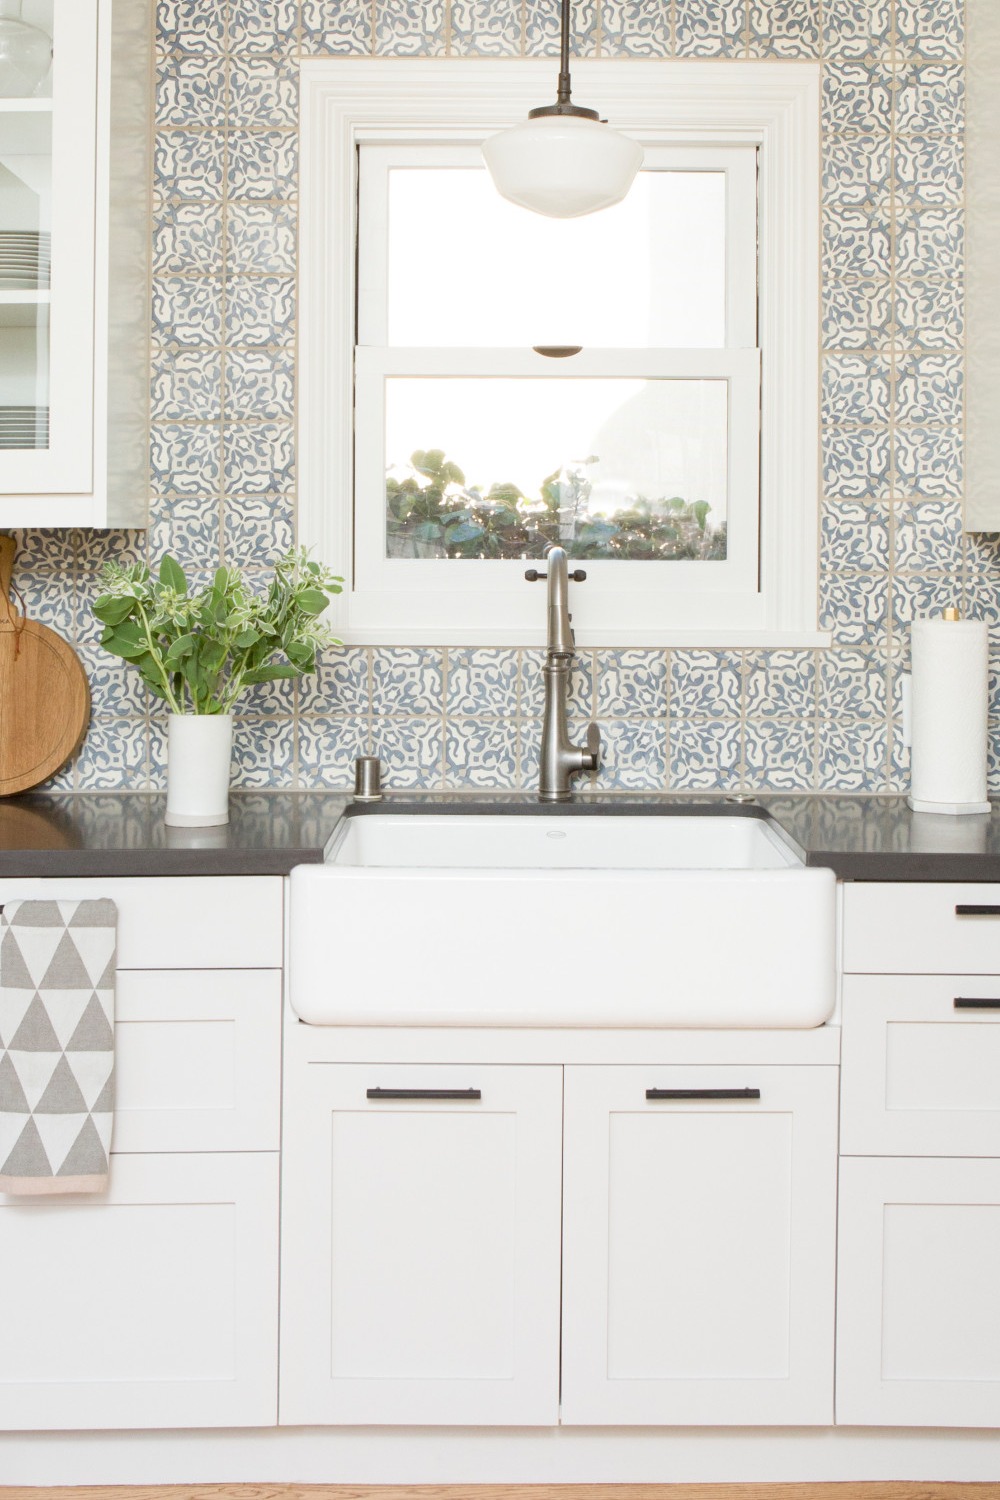 Cement Kitchen Tile Bathroom Tiles Create Fireplace Designs Color